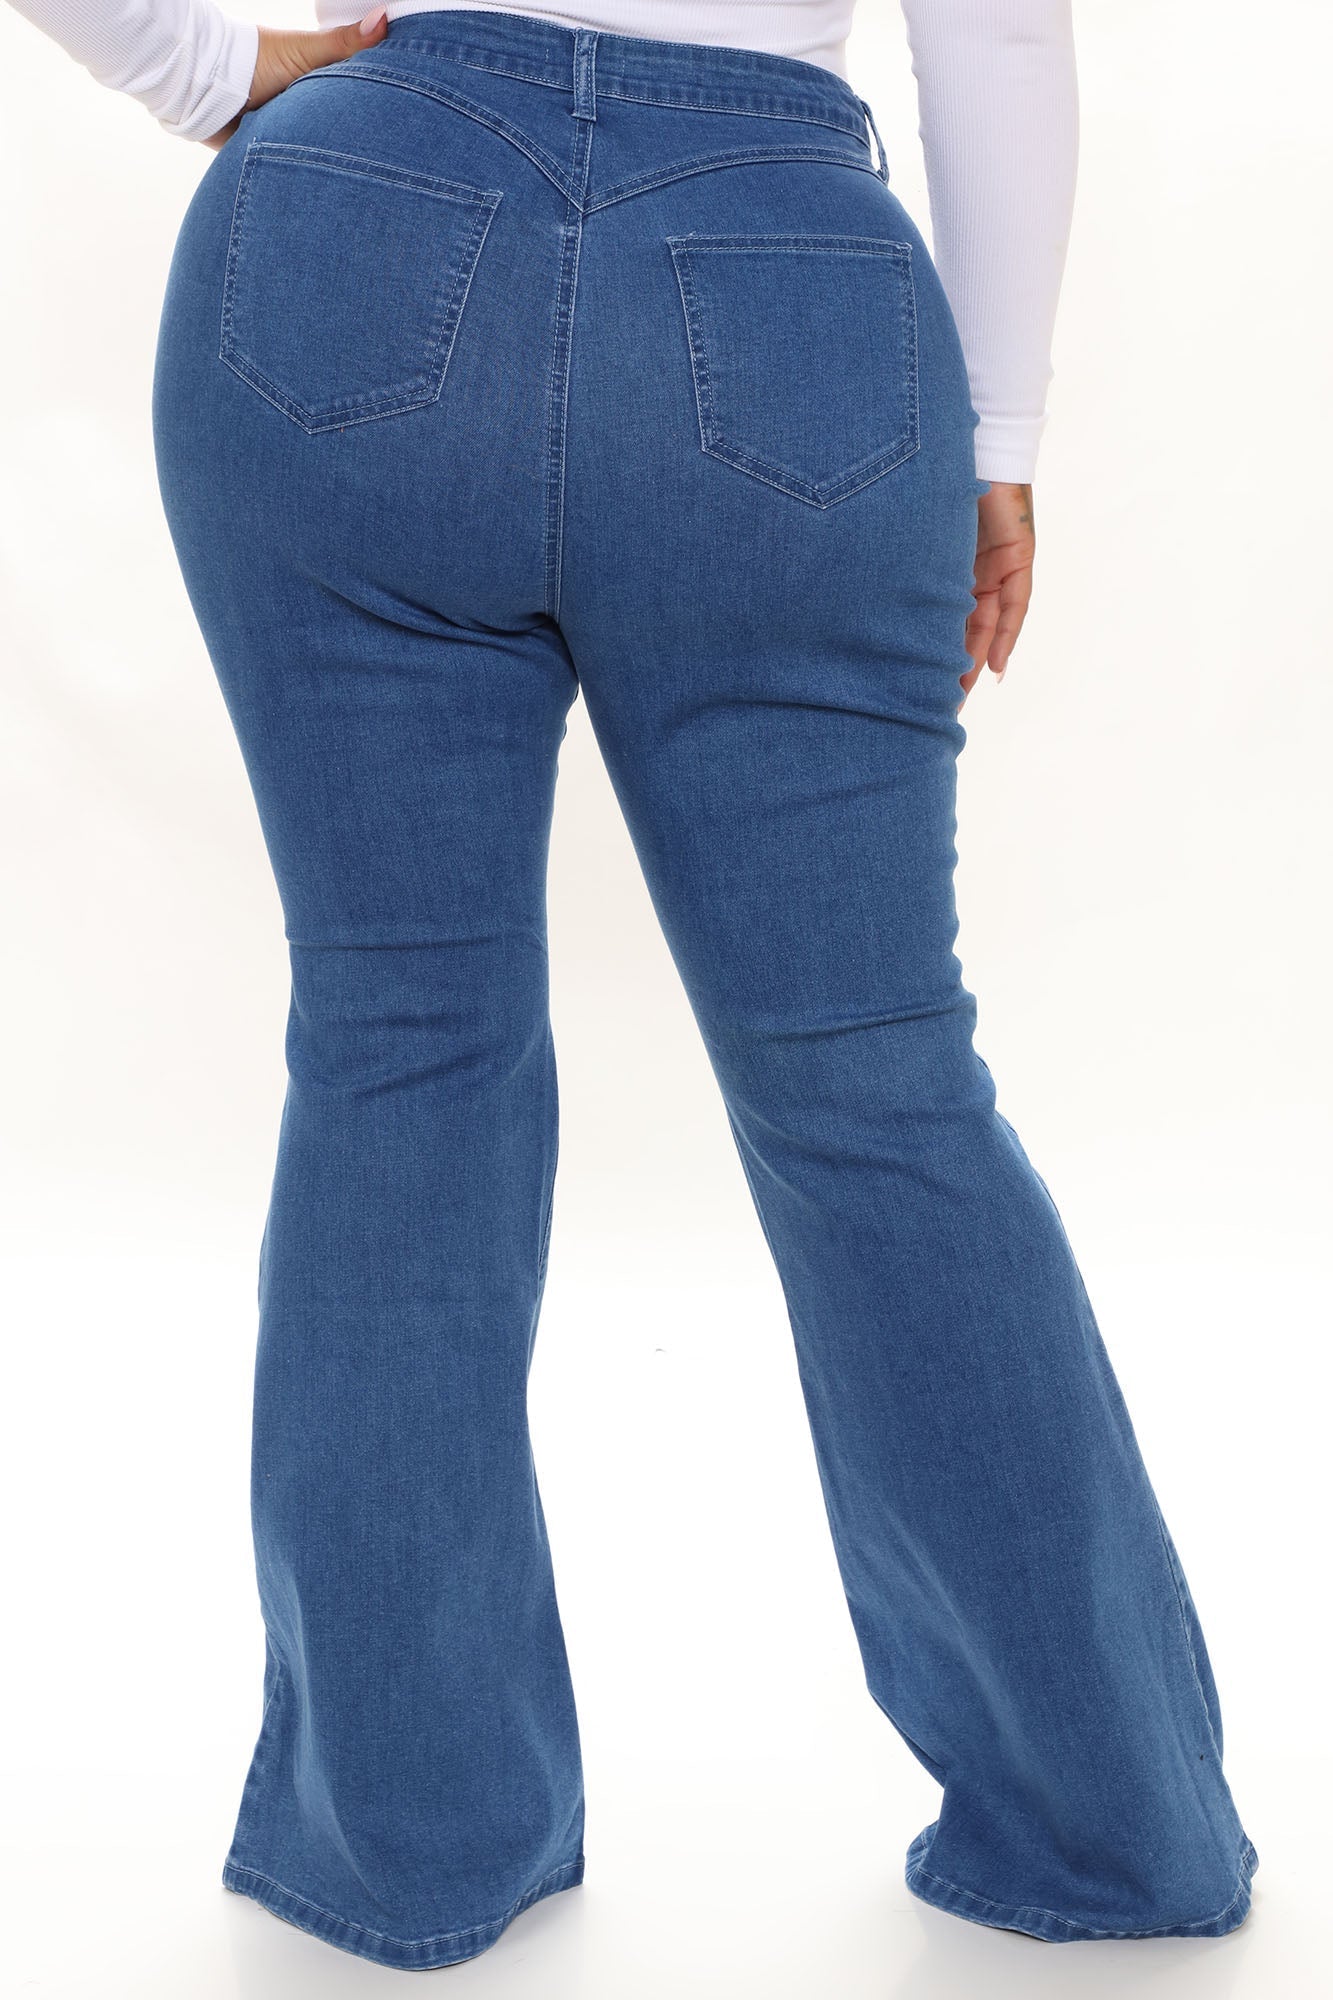 Out West Curvy Stretch Flare Jeans - Medium Blue Wash